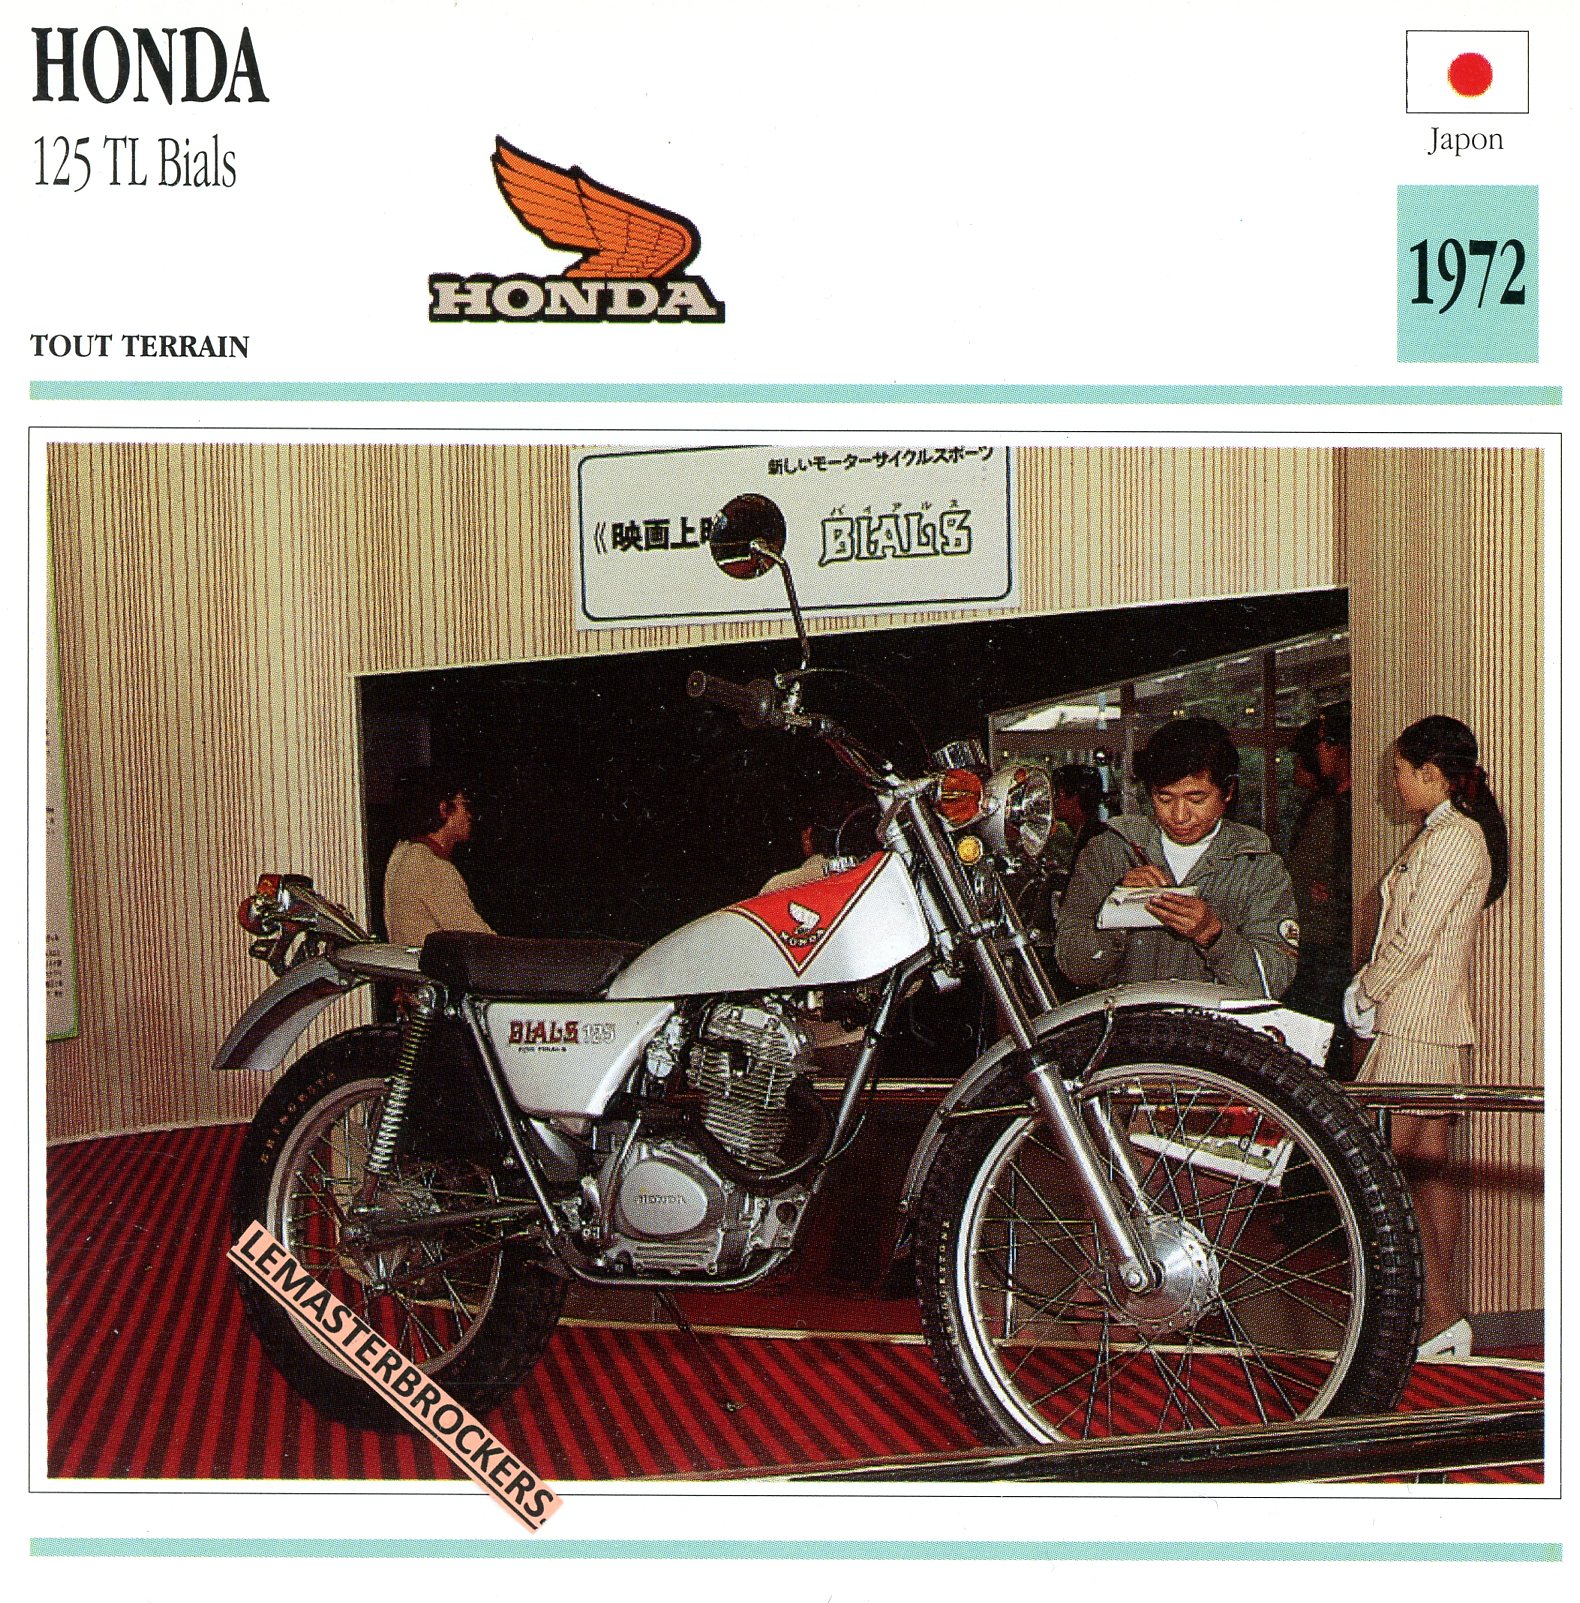 FICHE-MOTO-HONDA-125-TL-BIALS-1972-LEMASTERBROCKERS-CARS-MOTORCYCLE